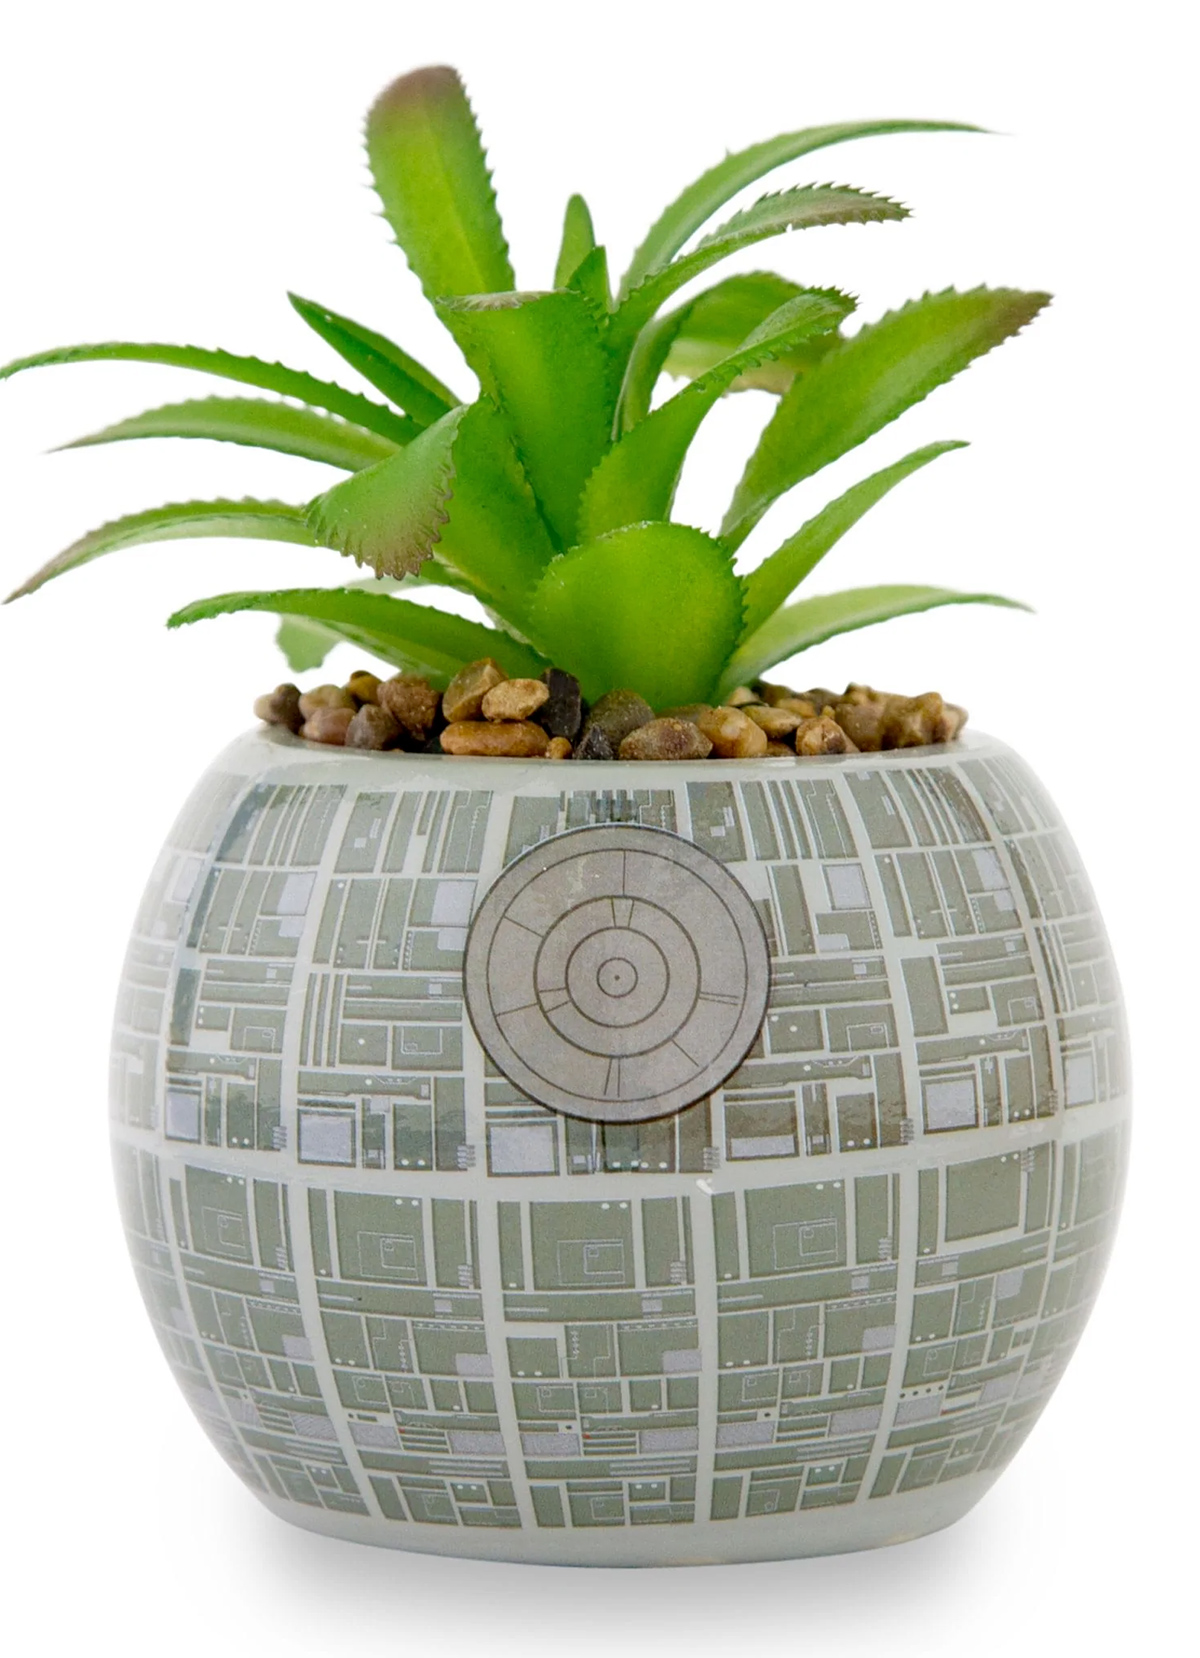 Mini-Vaso de Plantas Estrela da Morte de Star Wars (Death Star)